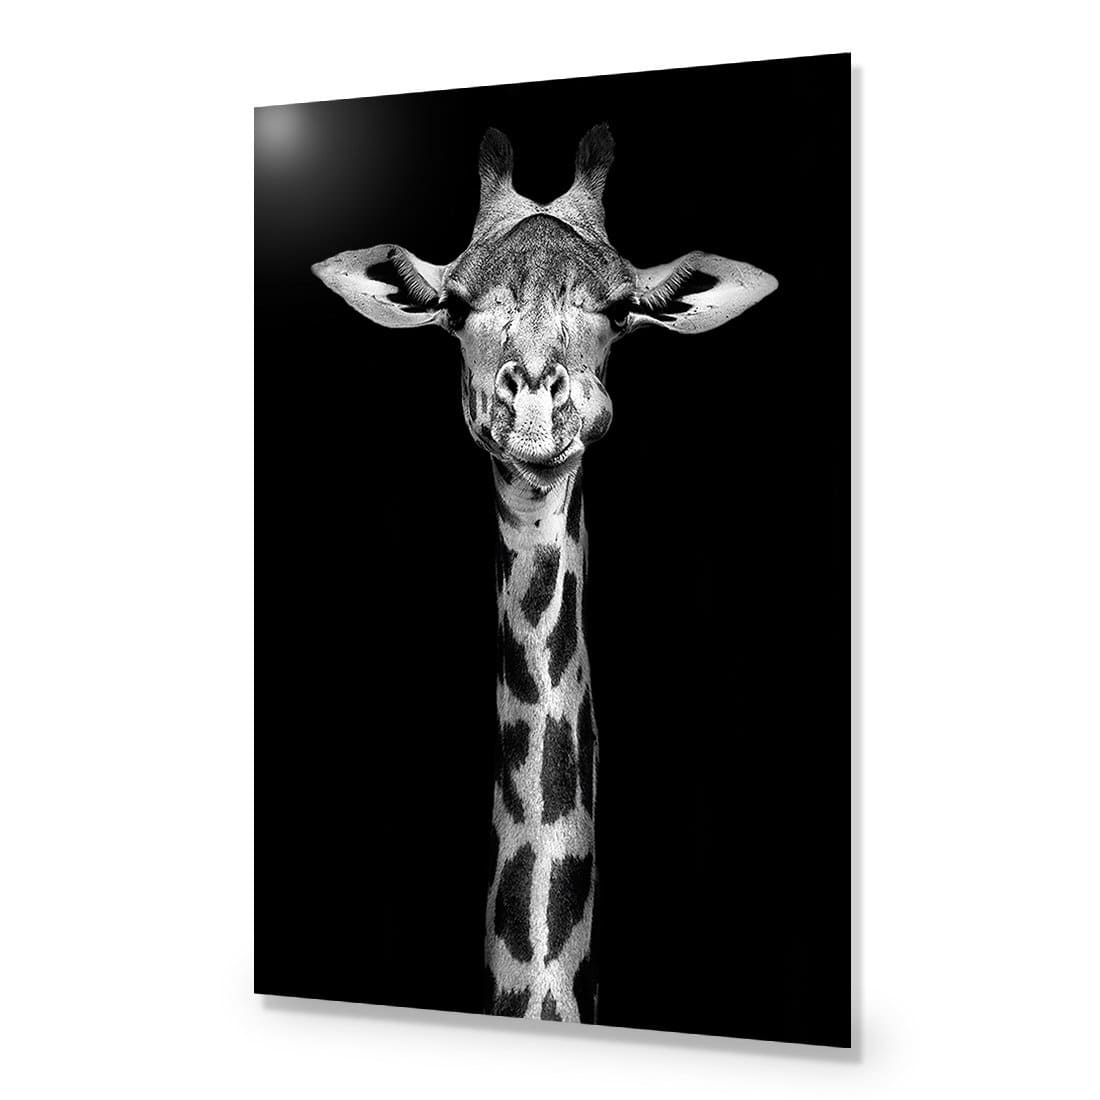 Thornycroft Giraffe-Acrylic-Wall Art Design-Without Border-Acrylic - No Frame-45x30cm-Wall Art Designs